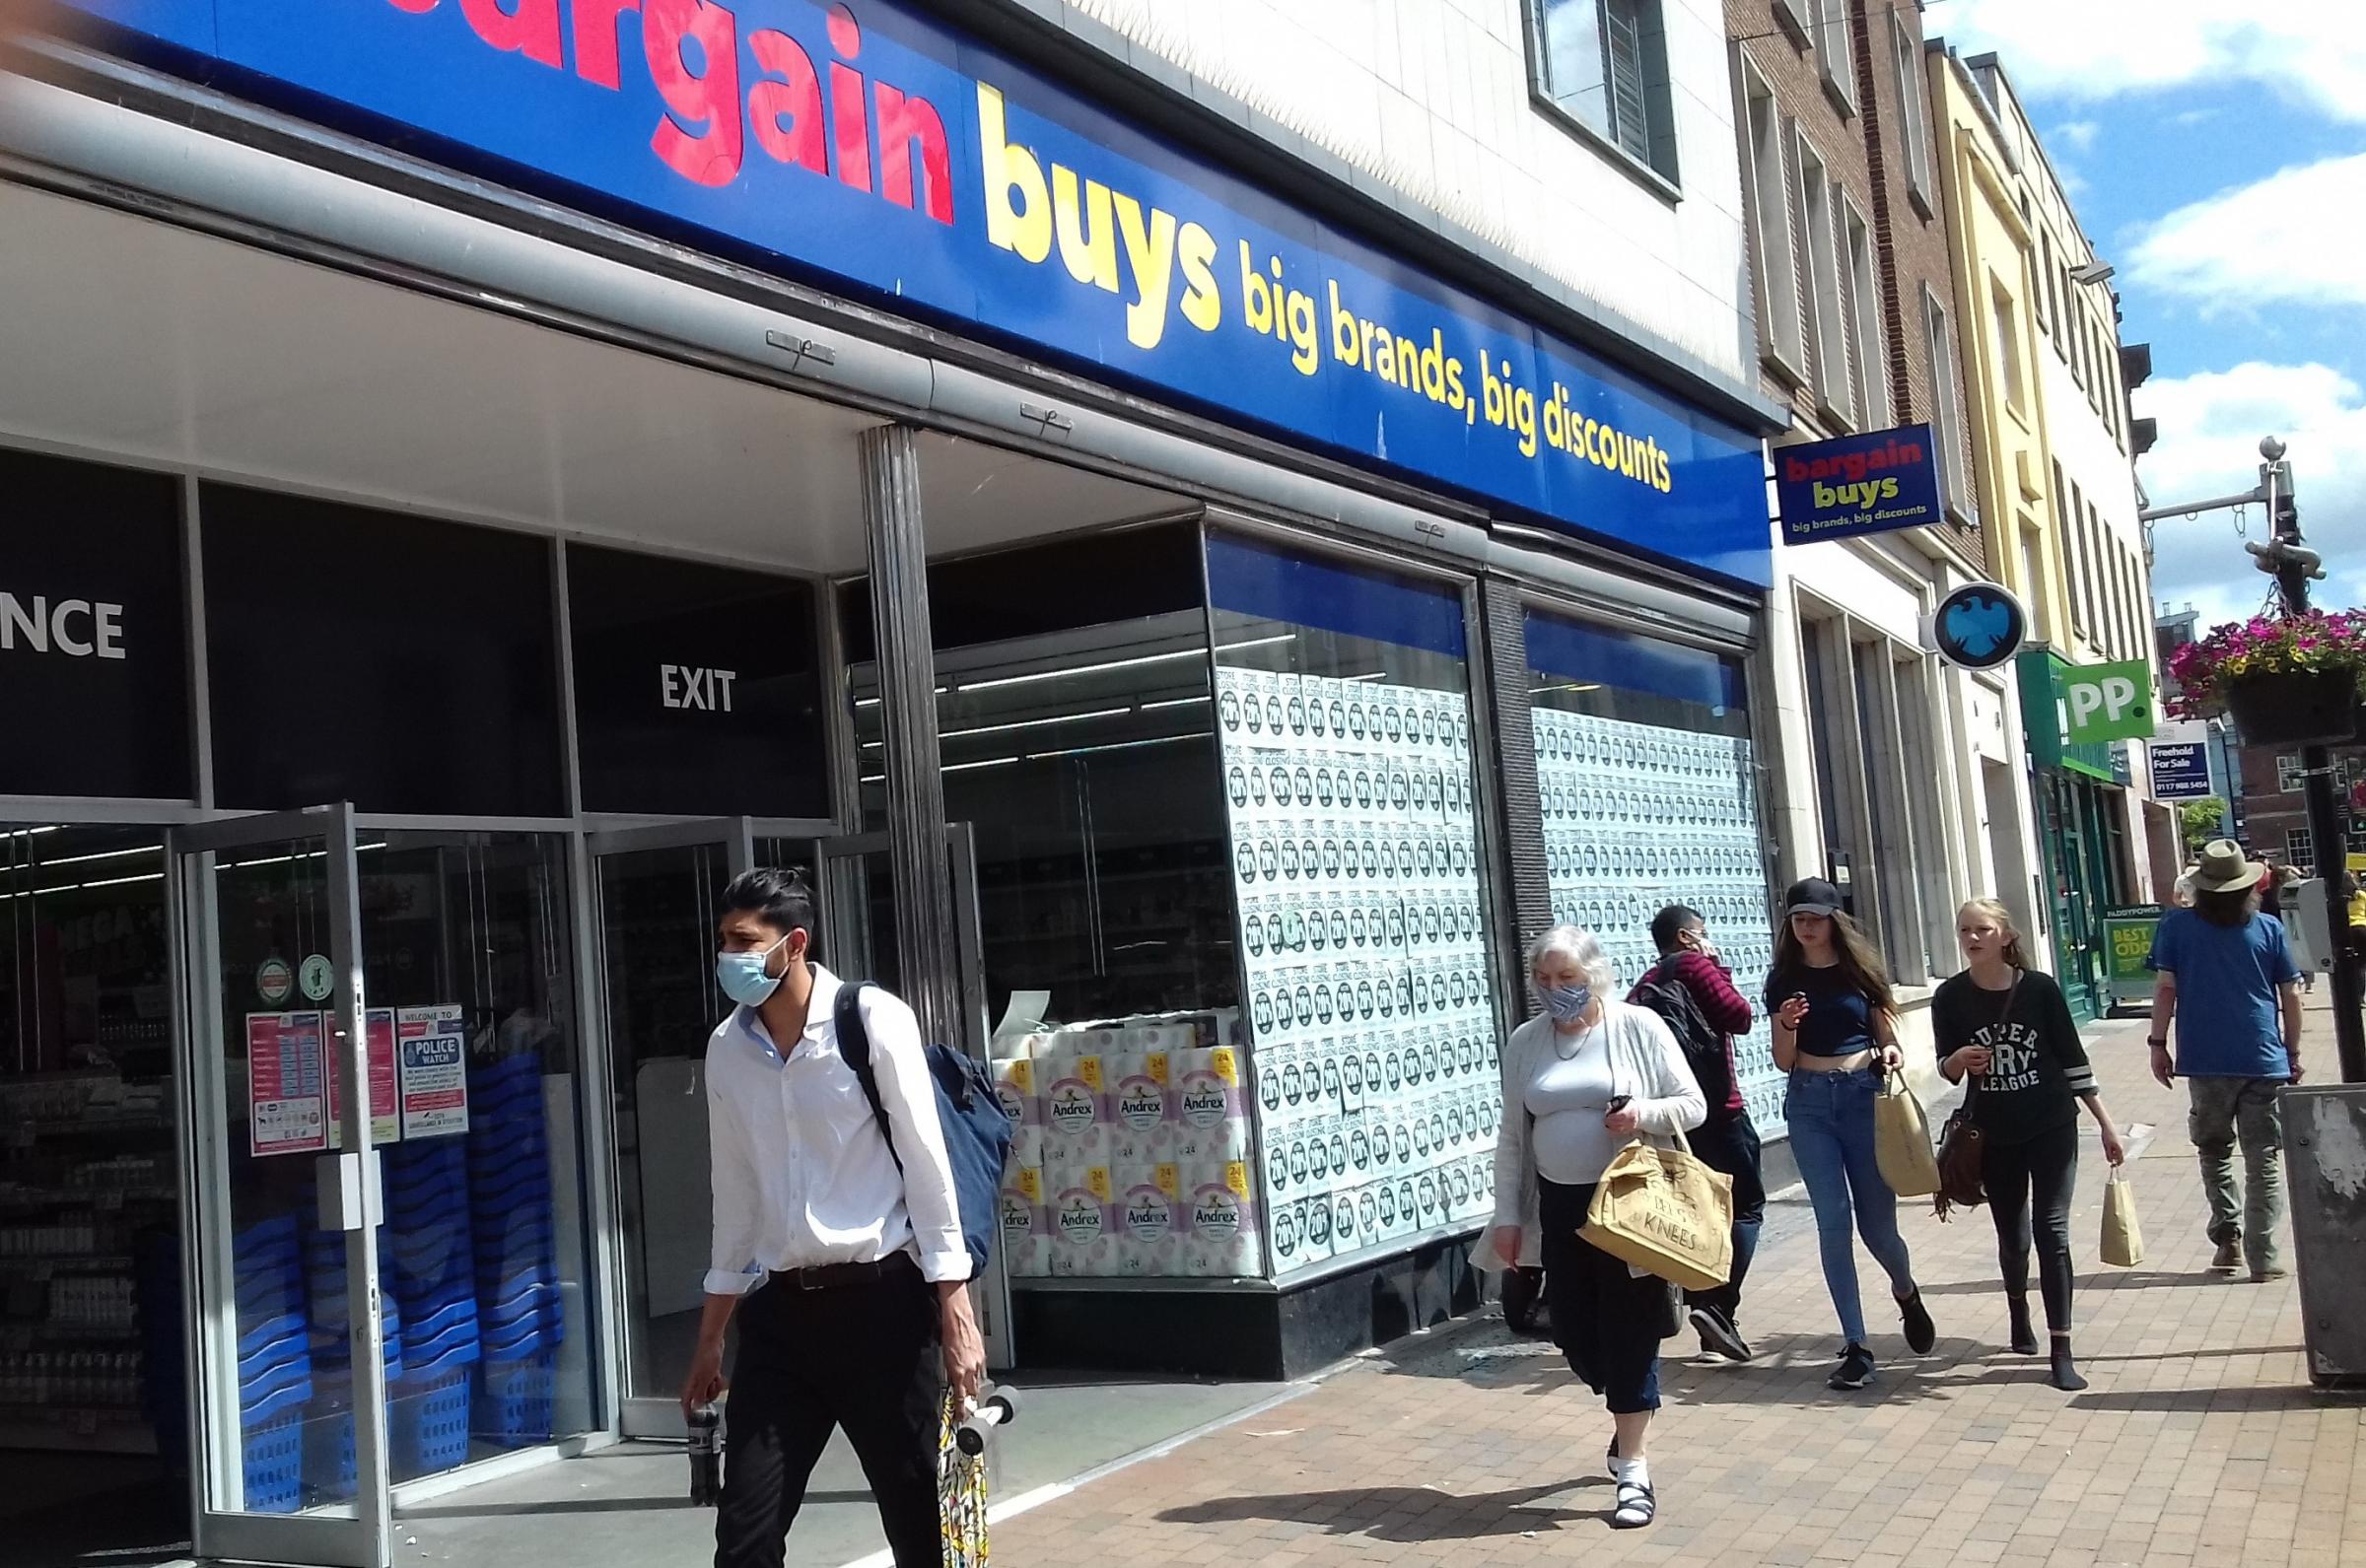 Bargain Buys is closing in Taunton